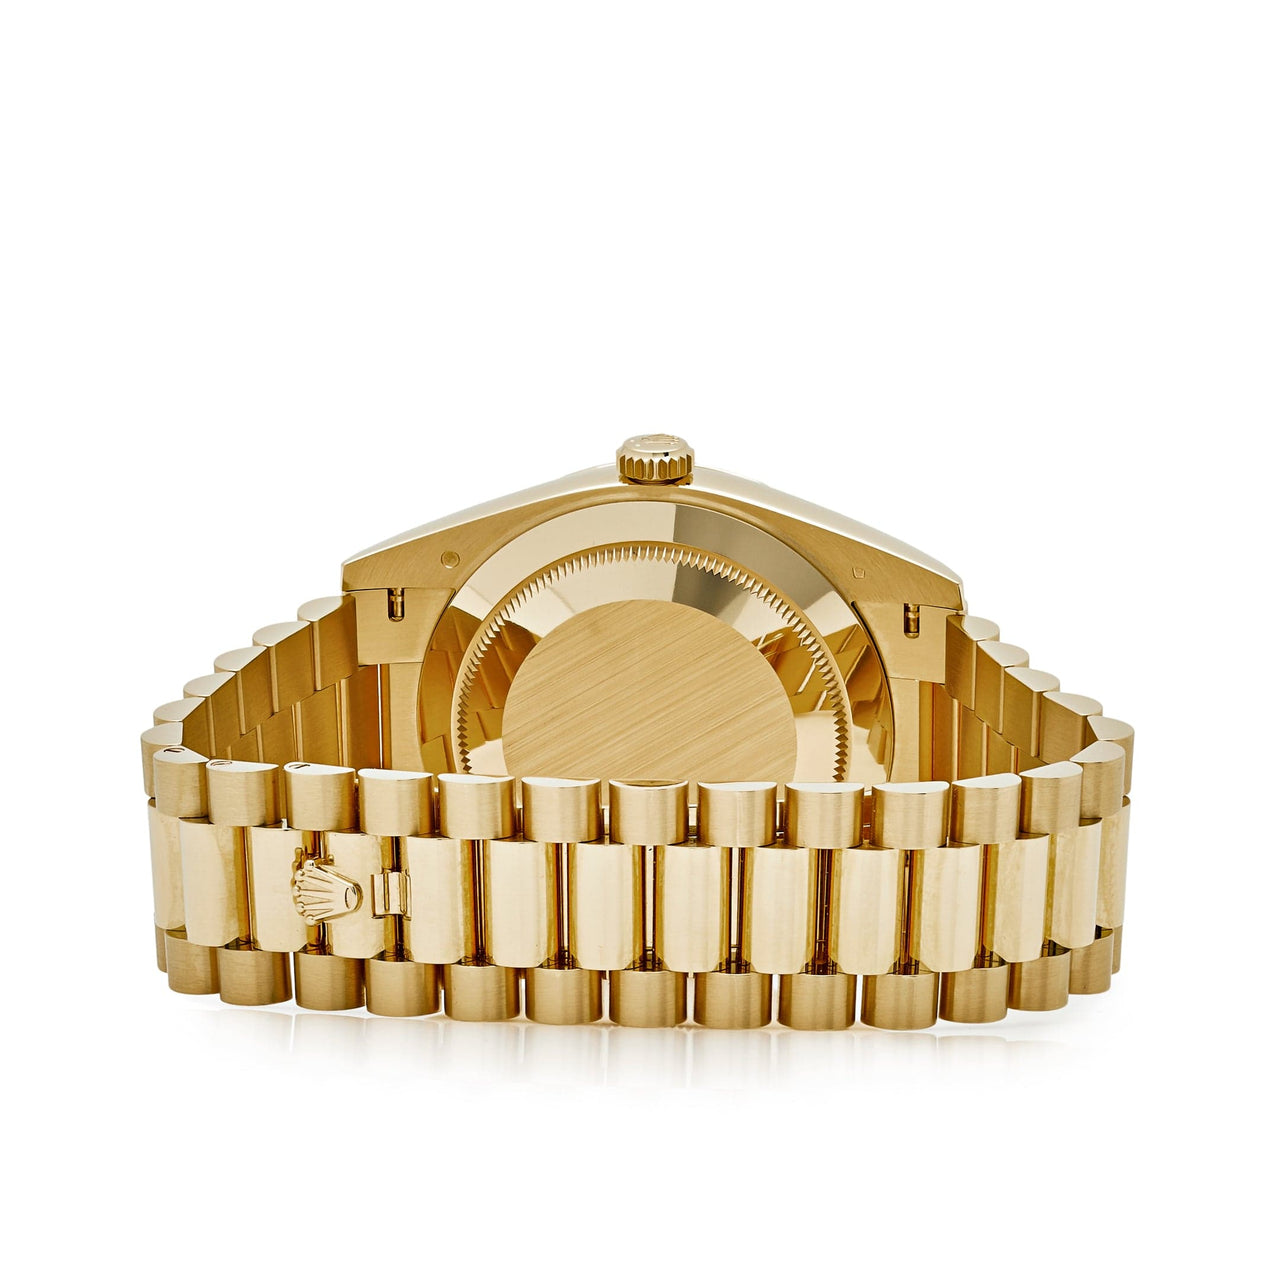 Luxury Watch Rolex Day-Date 40 Yellow Gold Black Diamond Dial 228238 Wrist Aficionado